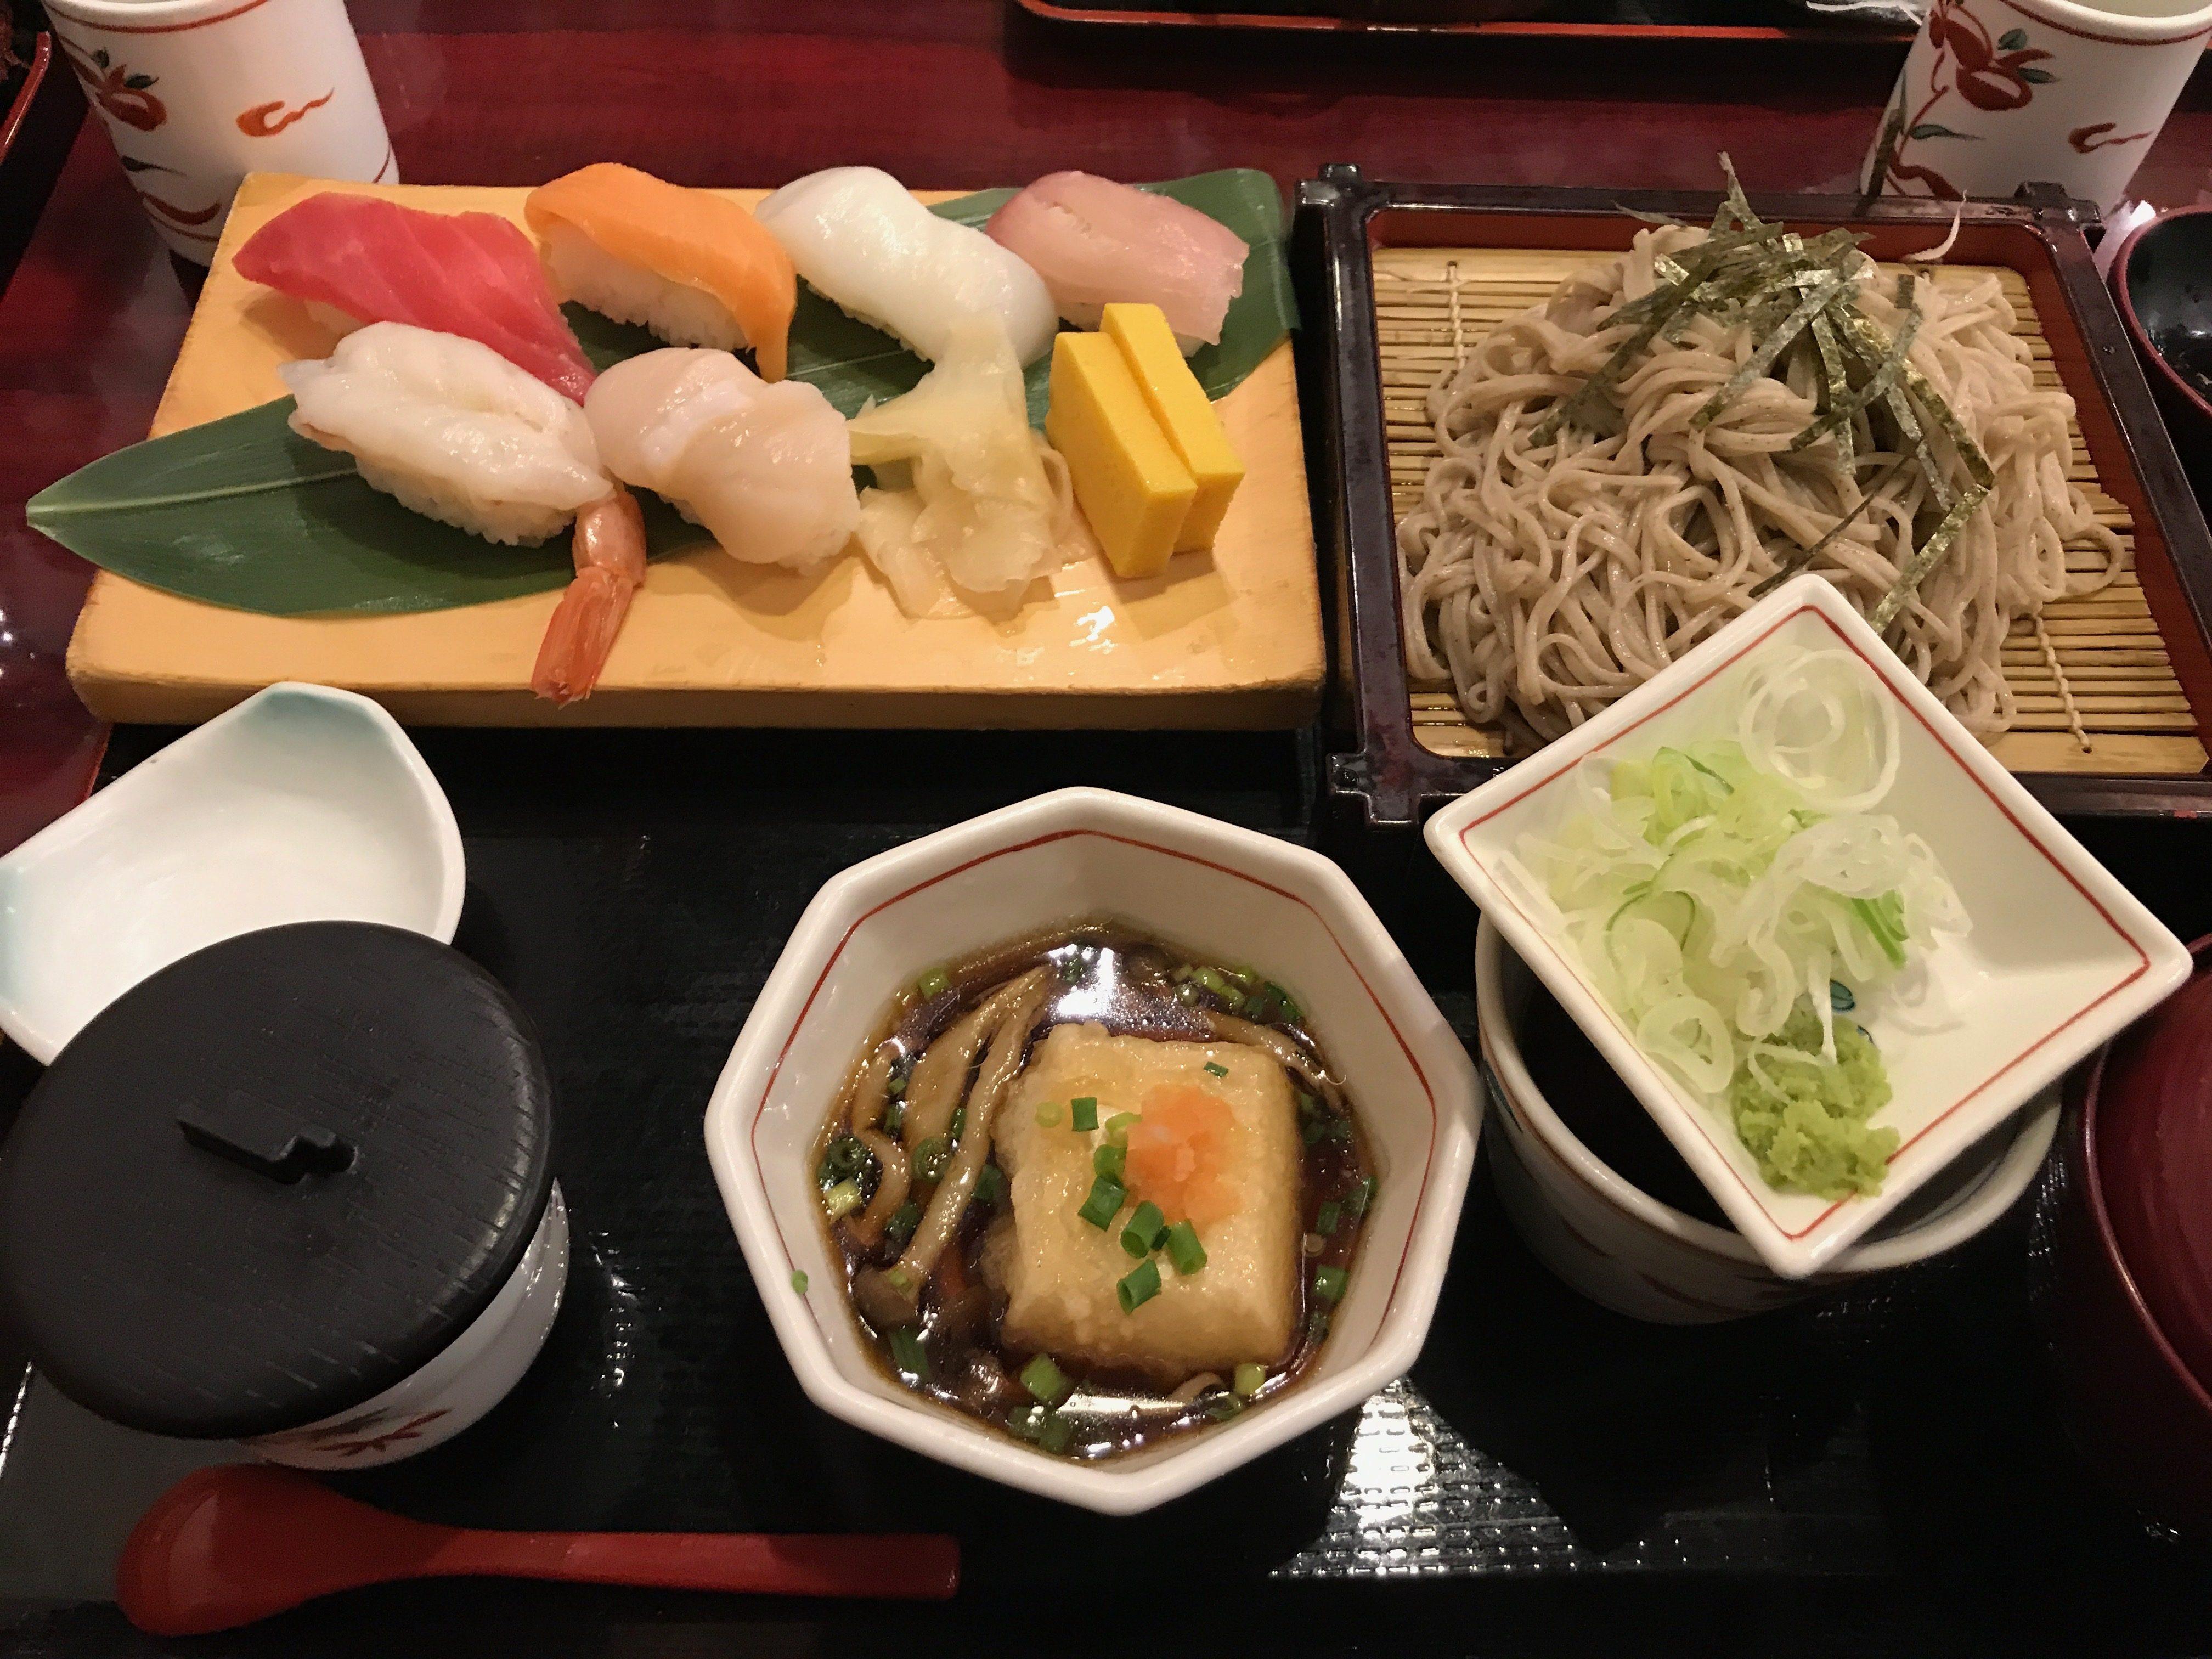 Eating Food In Japan - Sushi